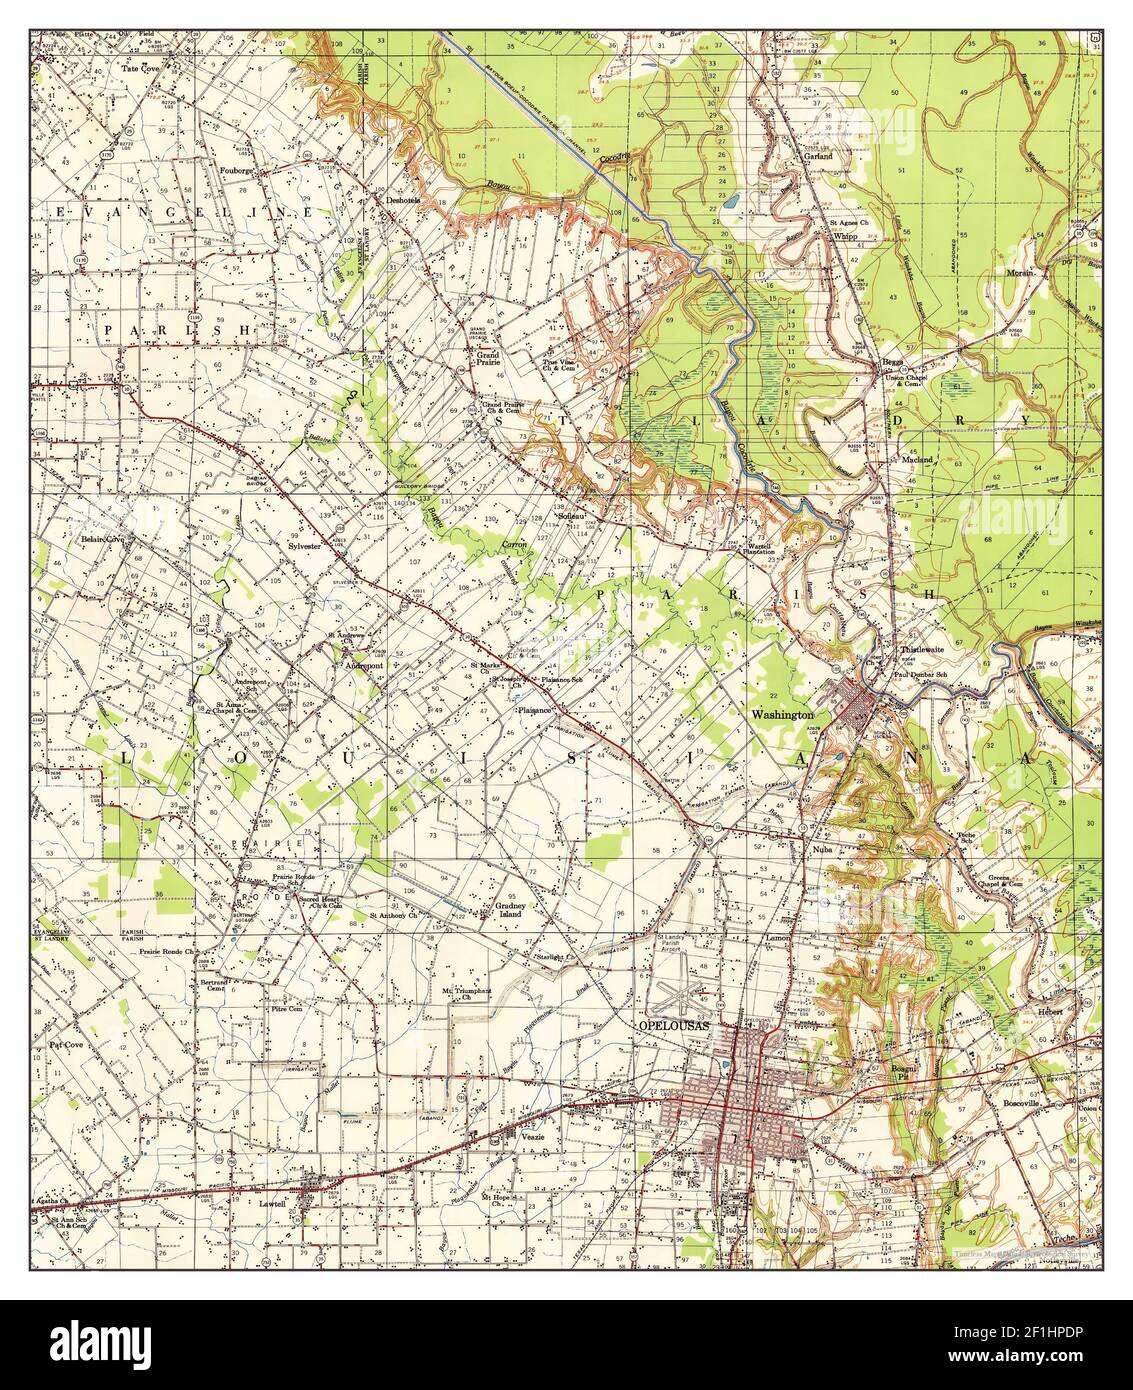 Opelousas, Louisiana, map 1956, 1:62500, United States of America by Timeless Maps, data U.S. Geological Survey Stock Photo